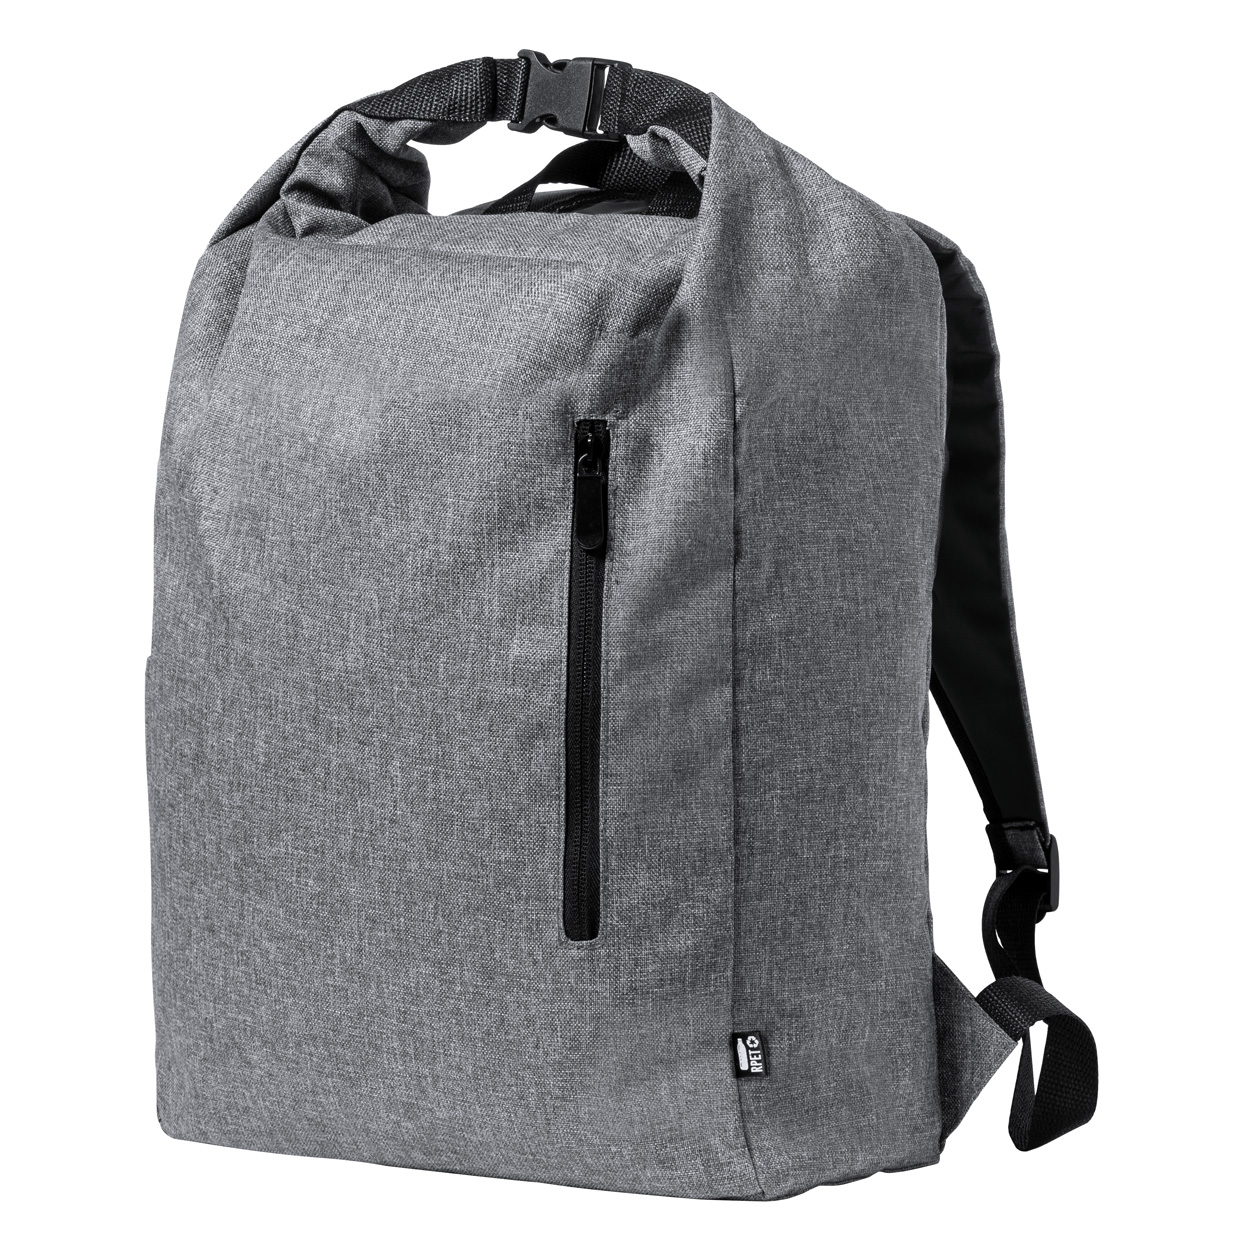 Sherpak RPET backpack - grey